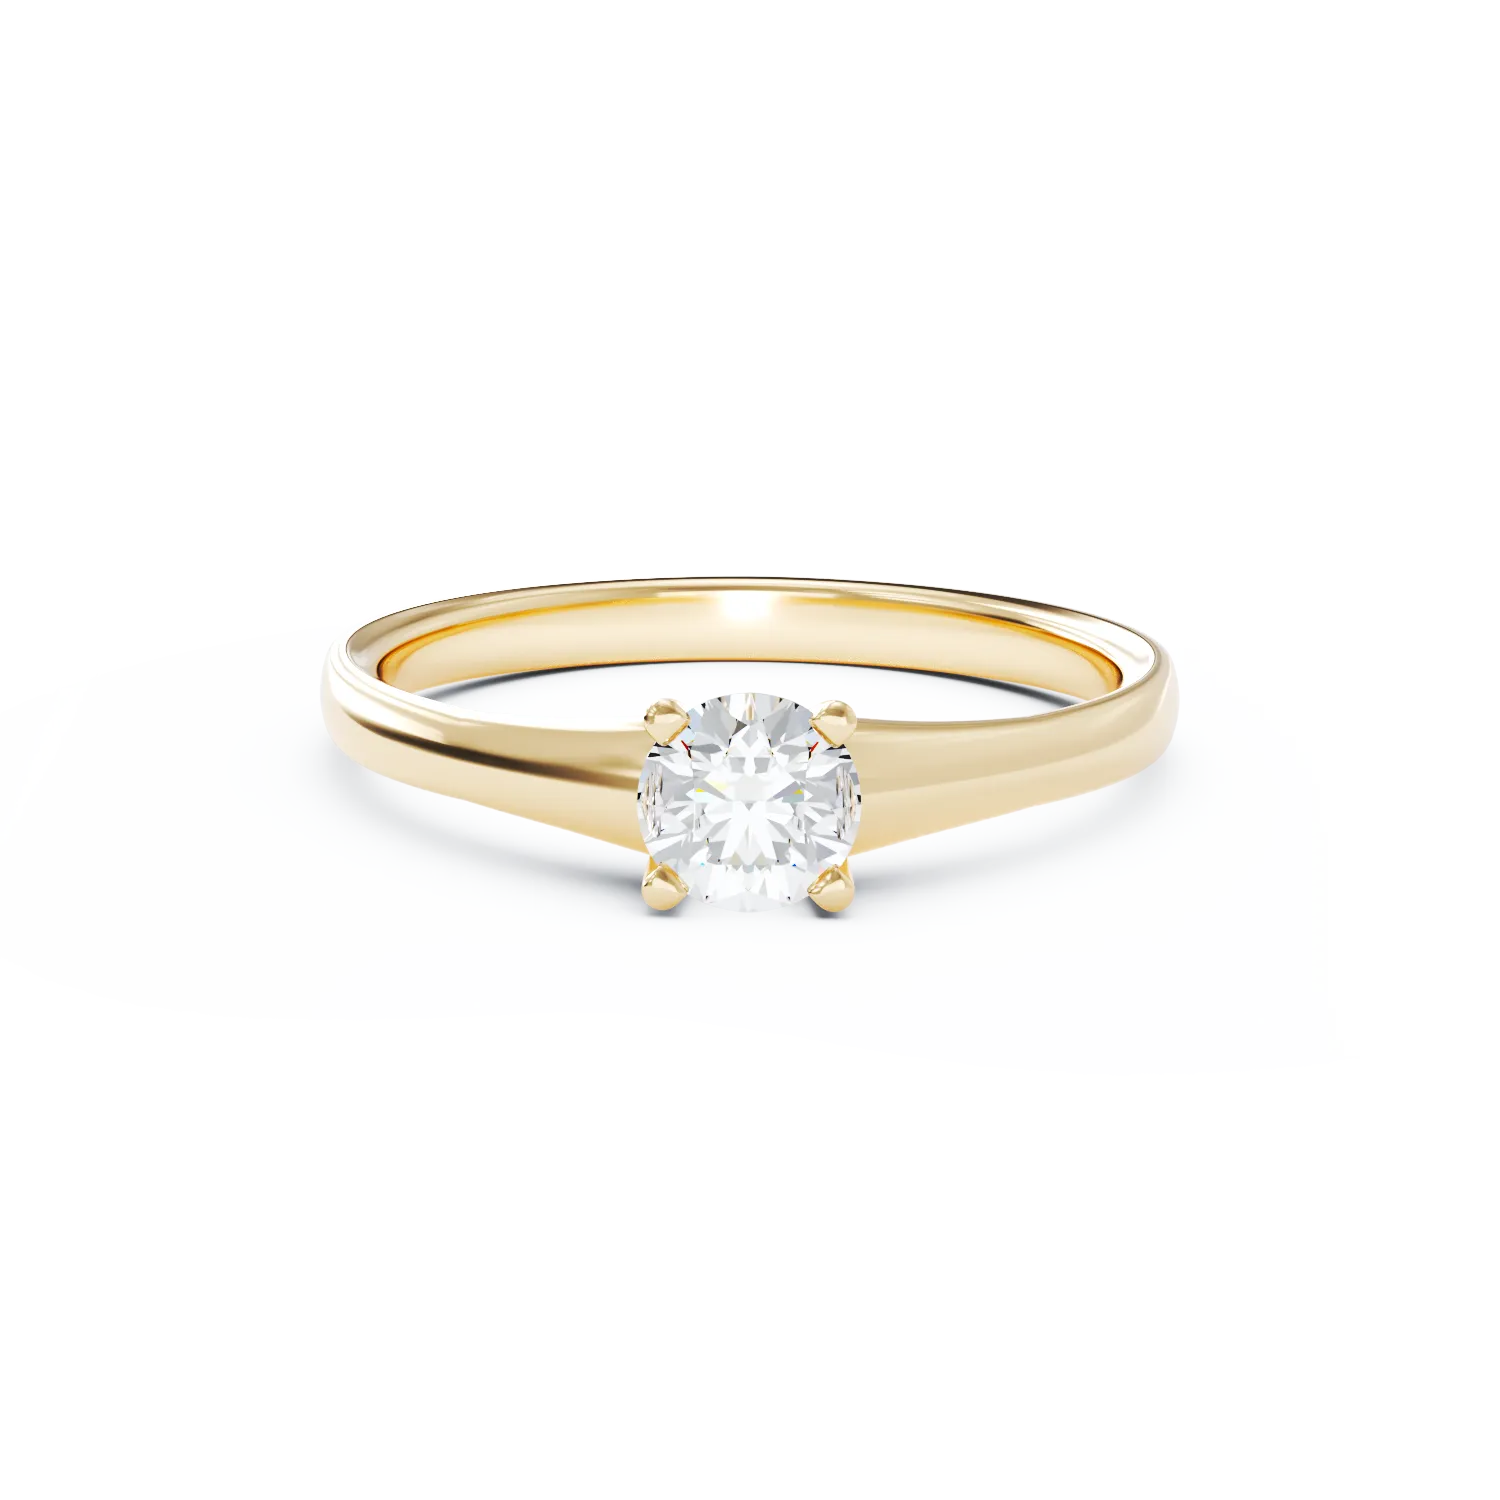 Inel de logodna din aur galben de 18K cu un diamant solitaire de 0.4ct